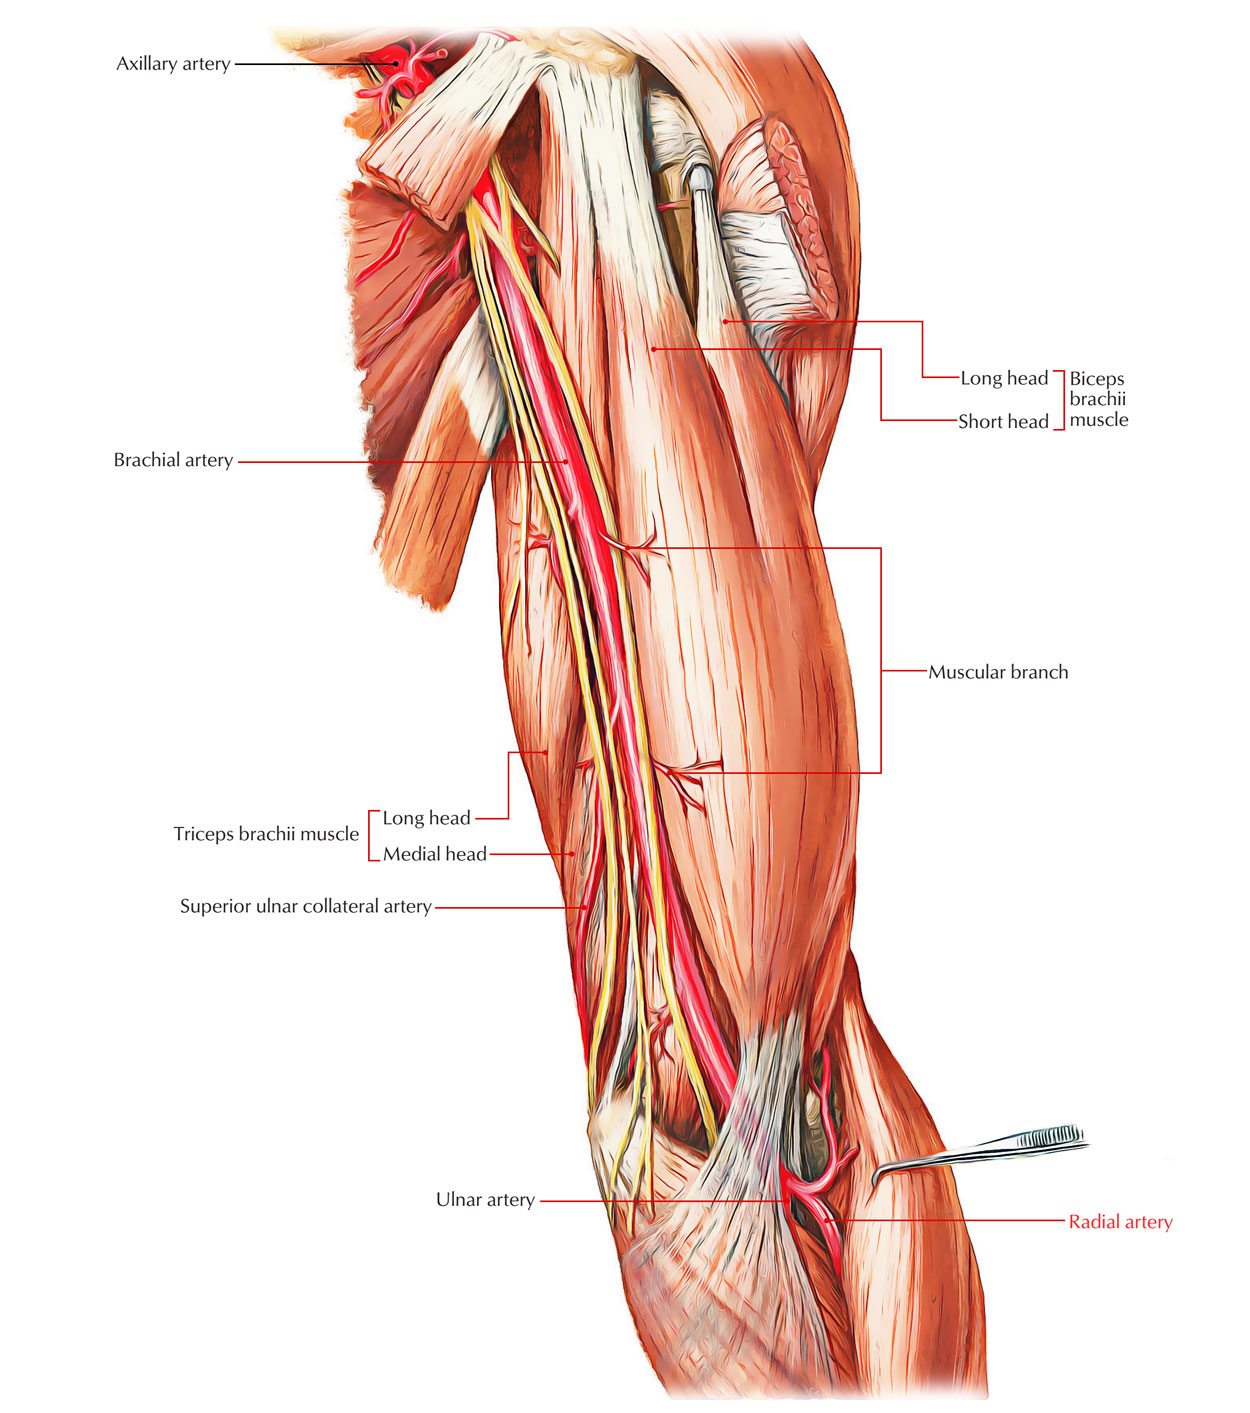 Arteries of the Upper Limb: Radial Artery